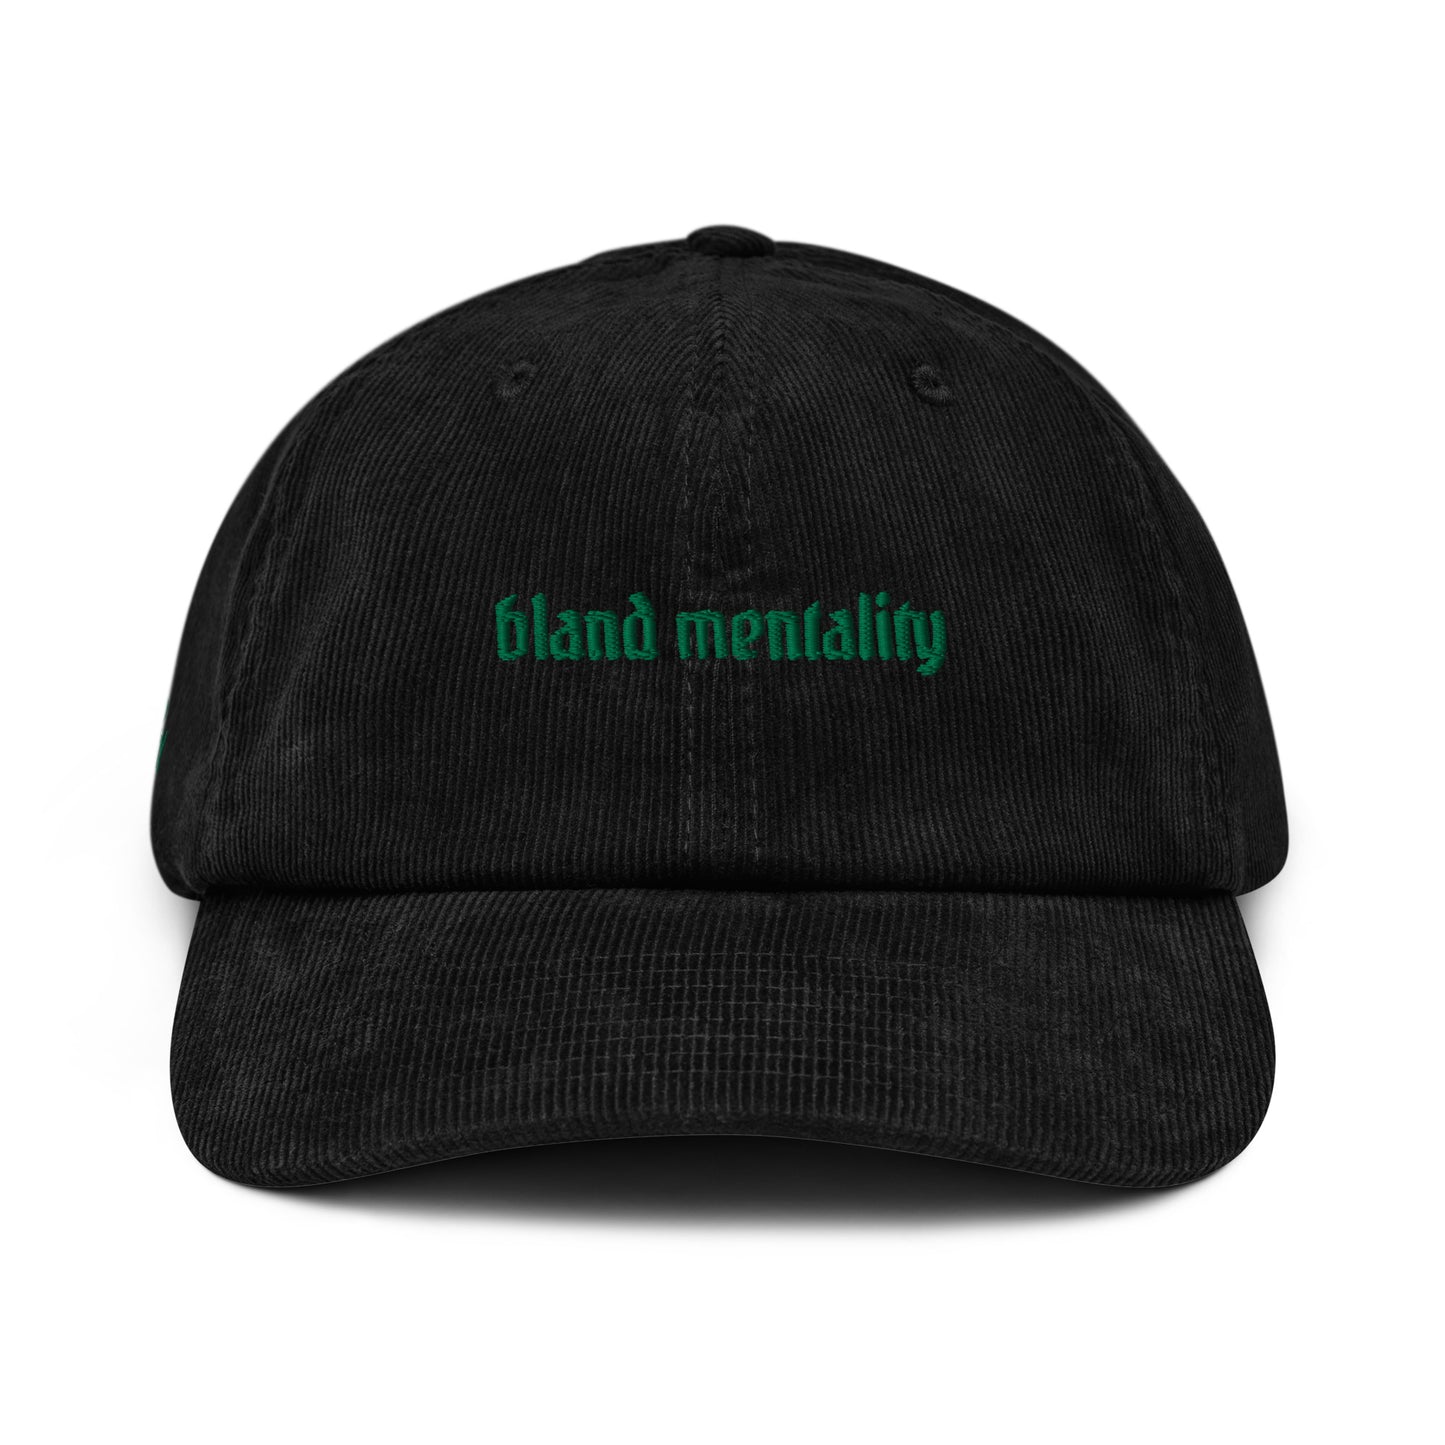 ADULT UNISEX CORDUROY HAT | GREEN, BLACK, WHITE